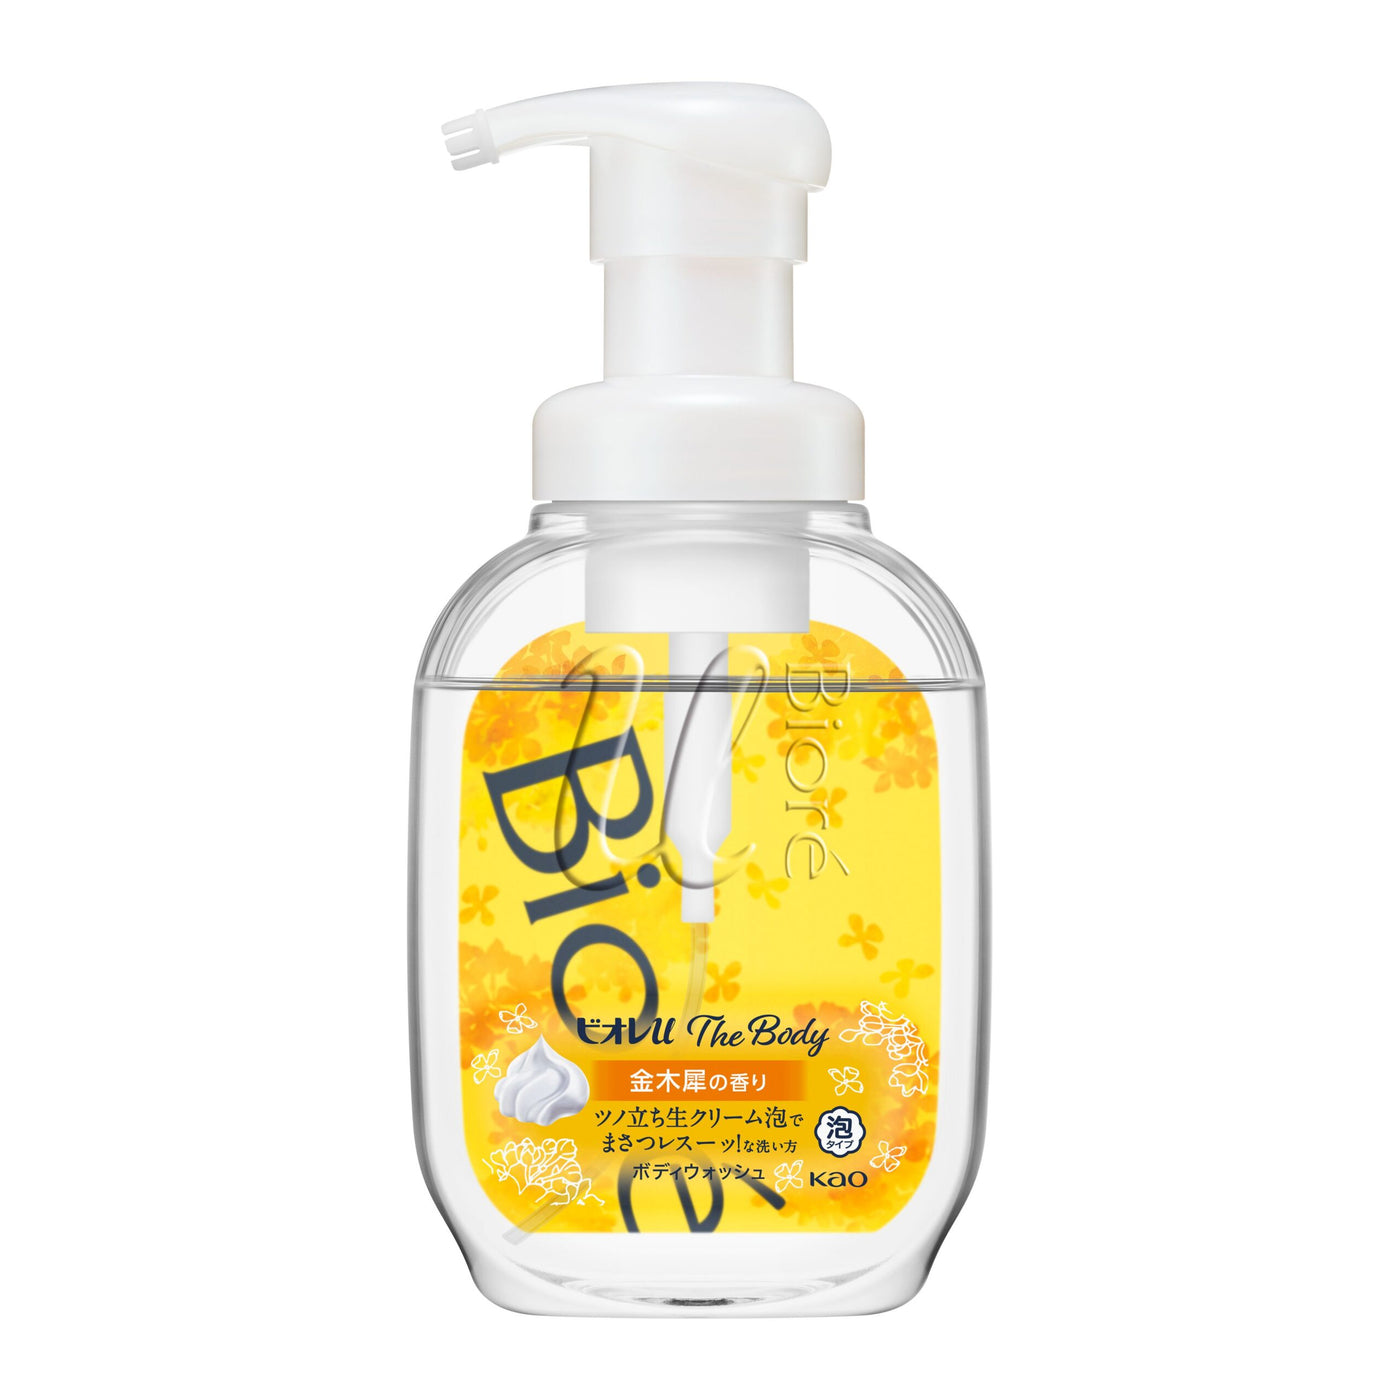 [6-PACK] KAO Japan Foam Body Wash 540ml 5 Fragrance avilable Osmanthus Fragrance